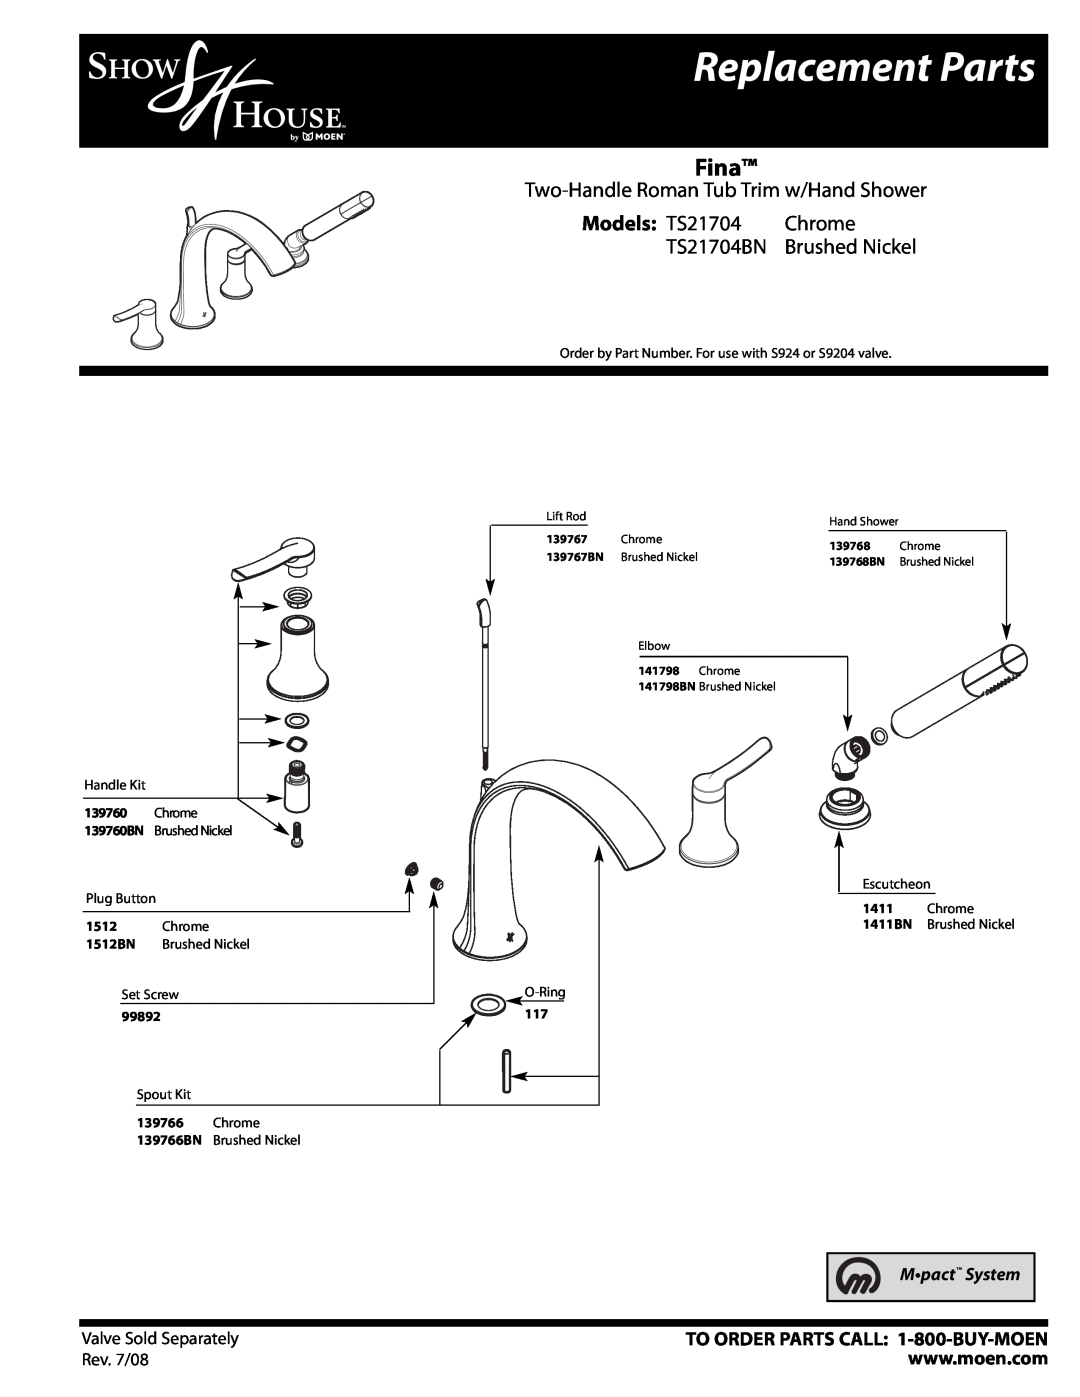 Moen TS21704BN manual Replacement Parts, Fina, Two-Handle Roman Tub Trim w/Hand Shower, Models TS21704, Chrome, Rev. 7/08 